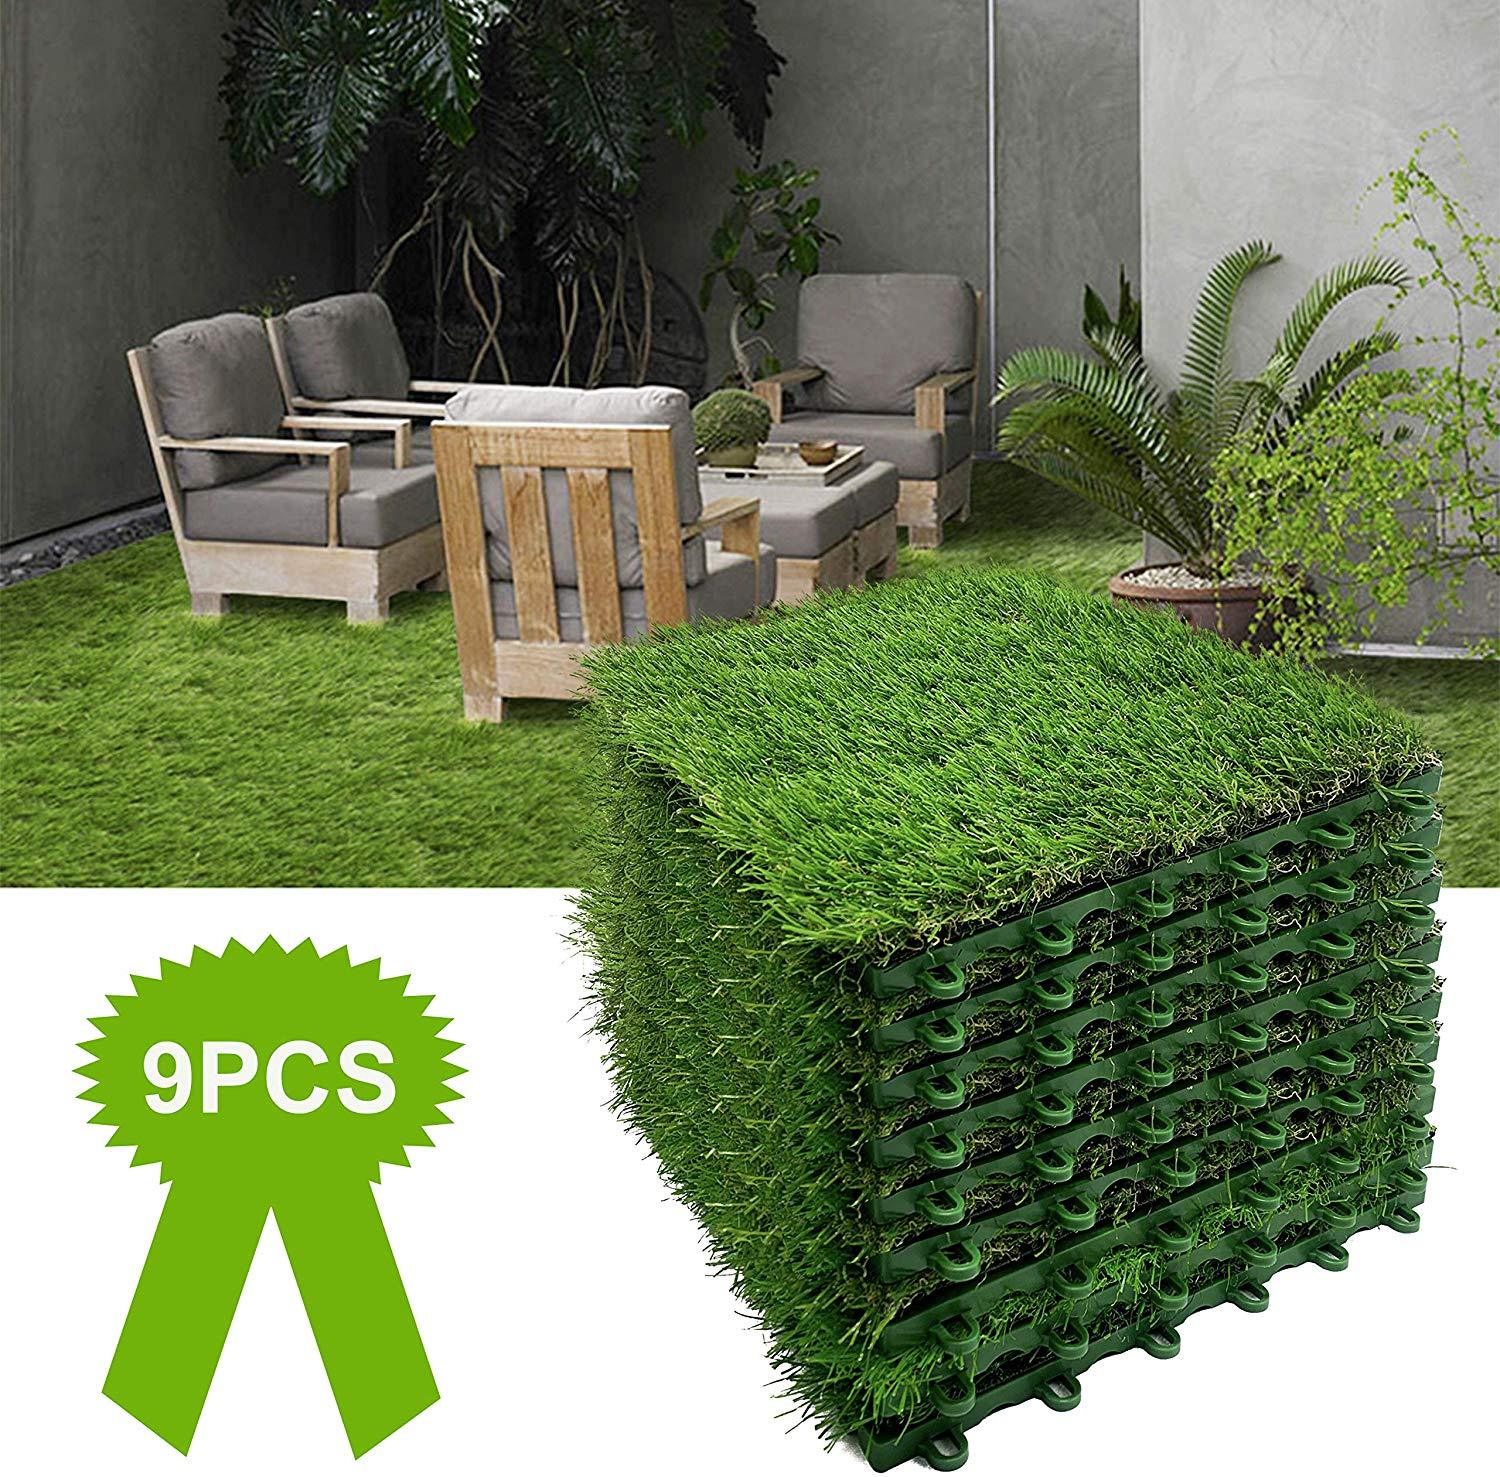 US$ 52.74 - Reliancer 9PCS Artificial Grass Turf ...